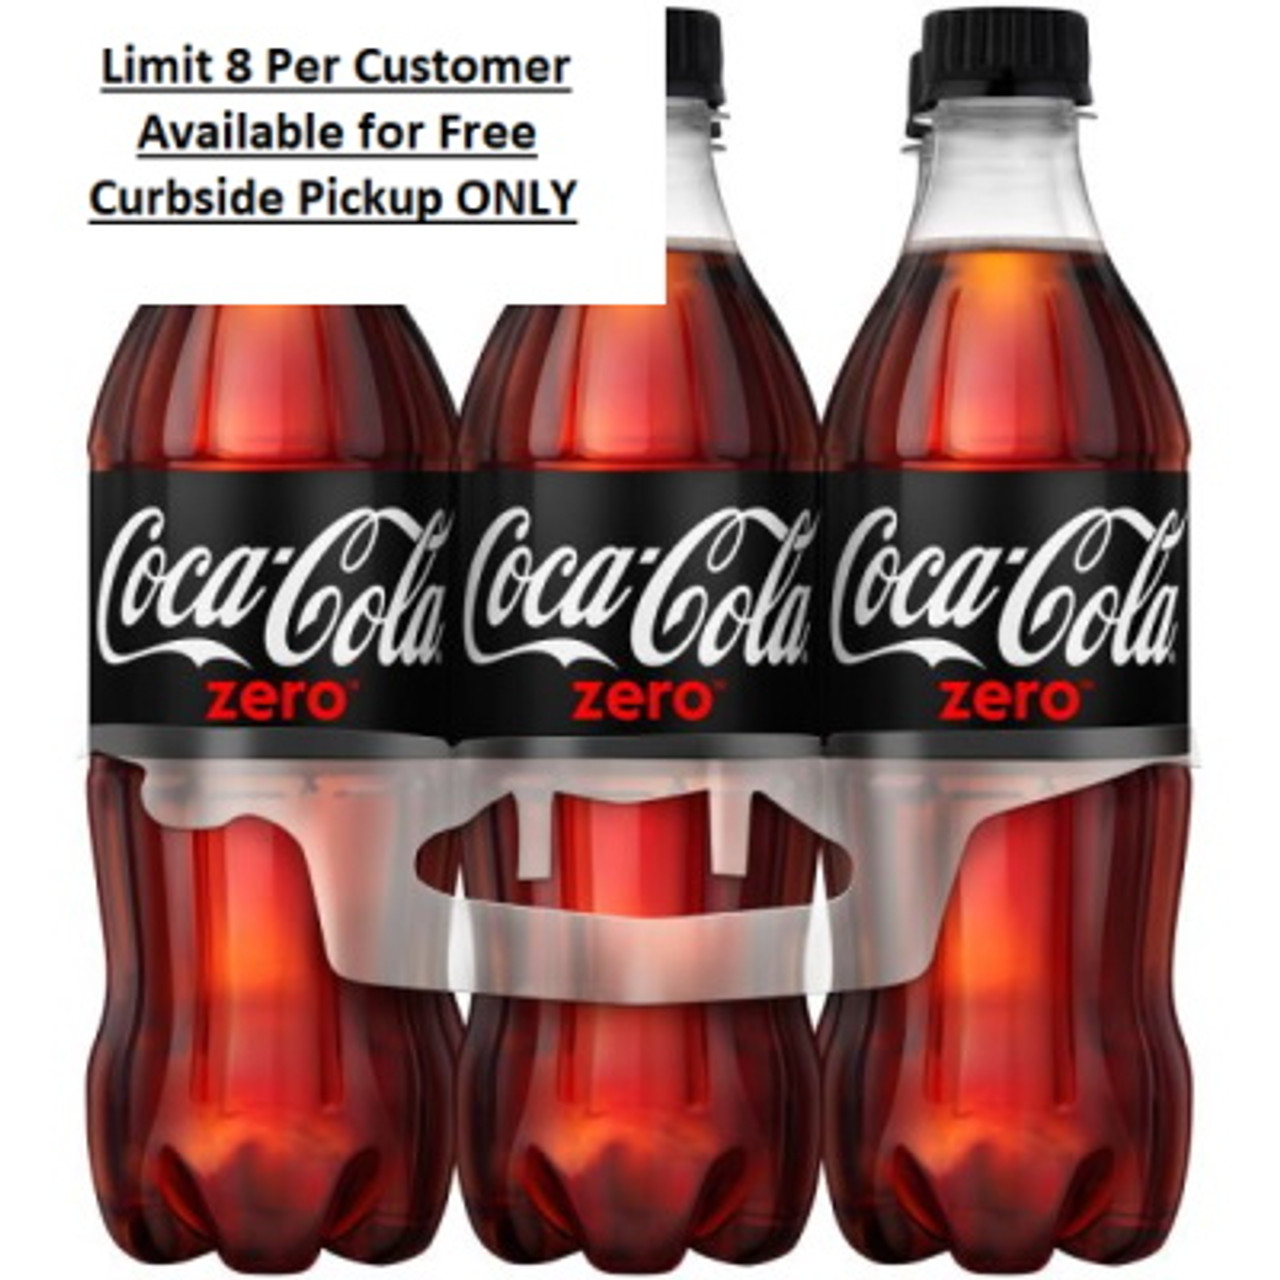 Coca-Cola Zero Sugar Glass Bottles, 8 fl oz, 6 Pack